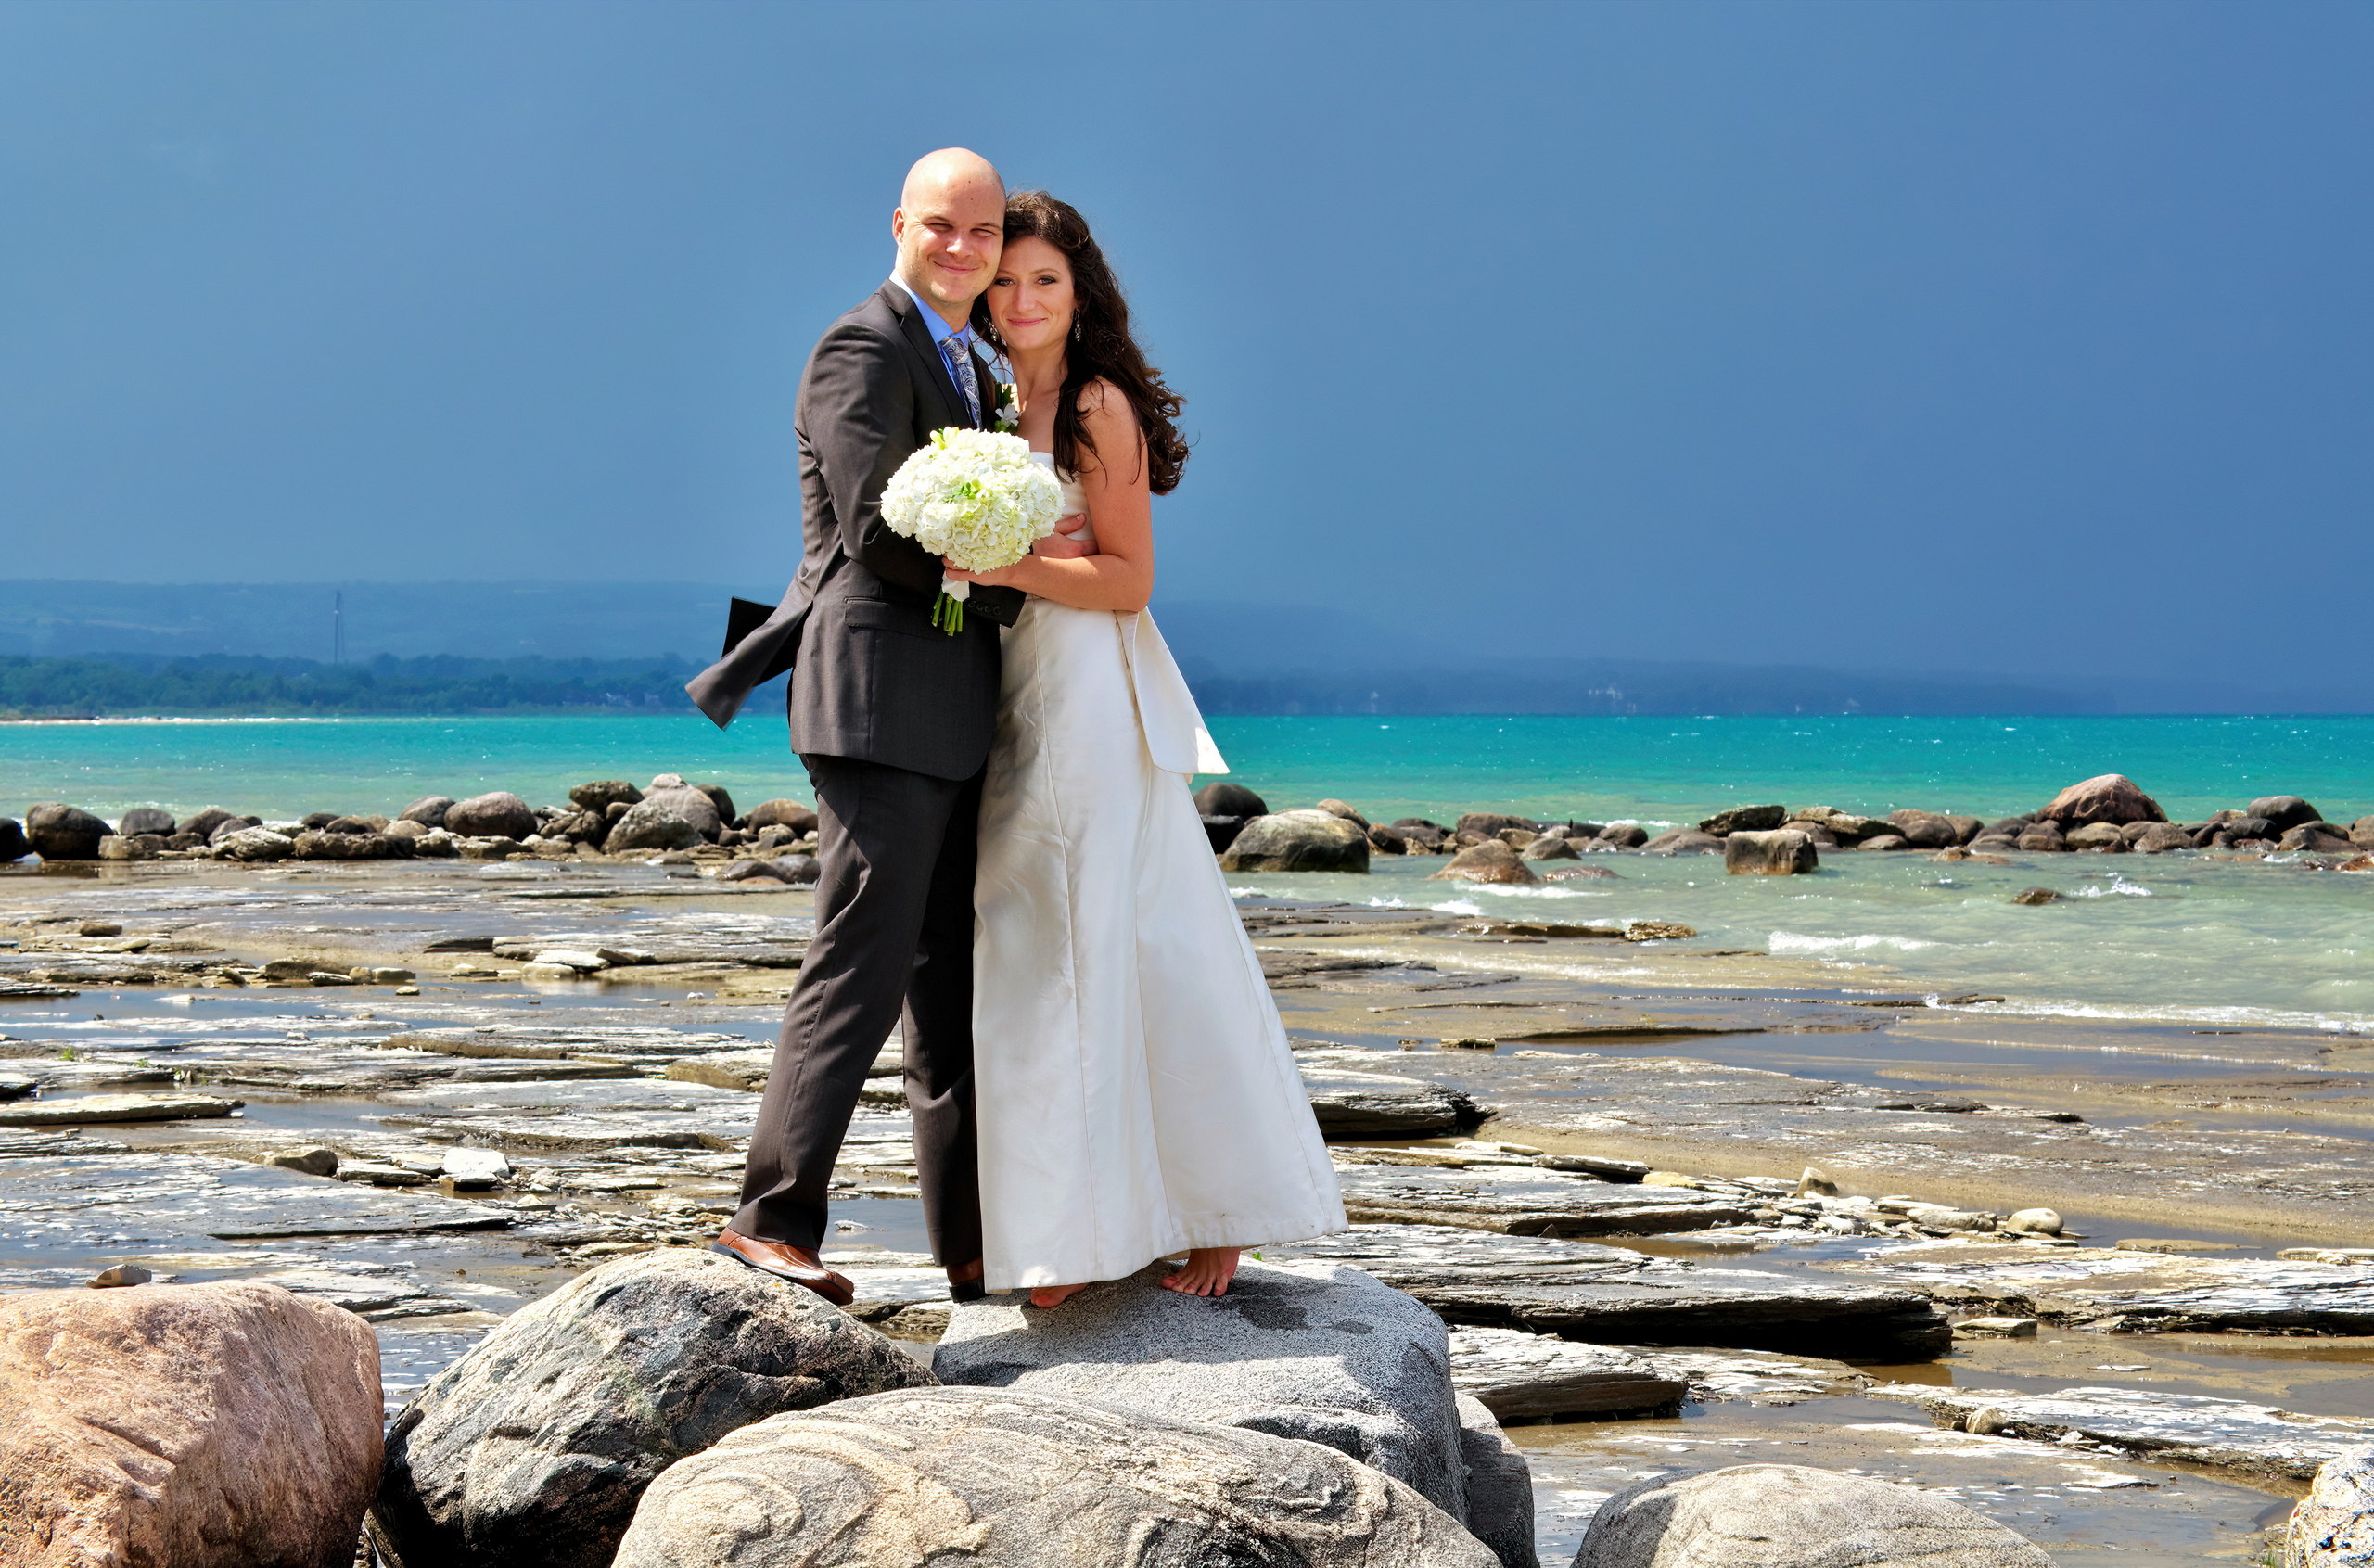 Wedding Couple on Rocky Craigleith Beach before a Summer Storm